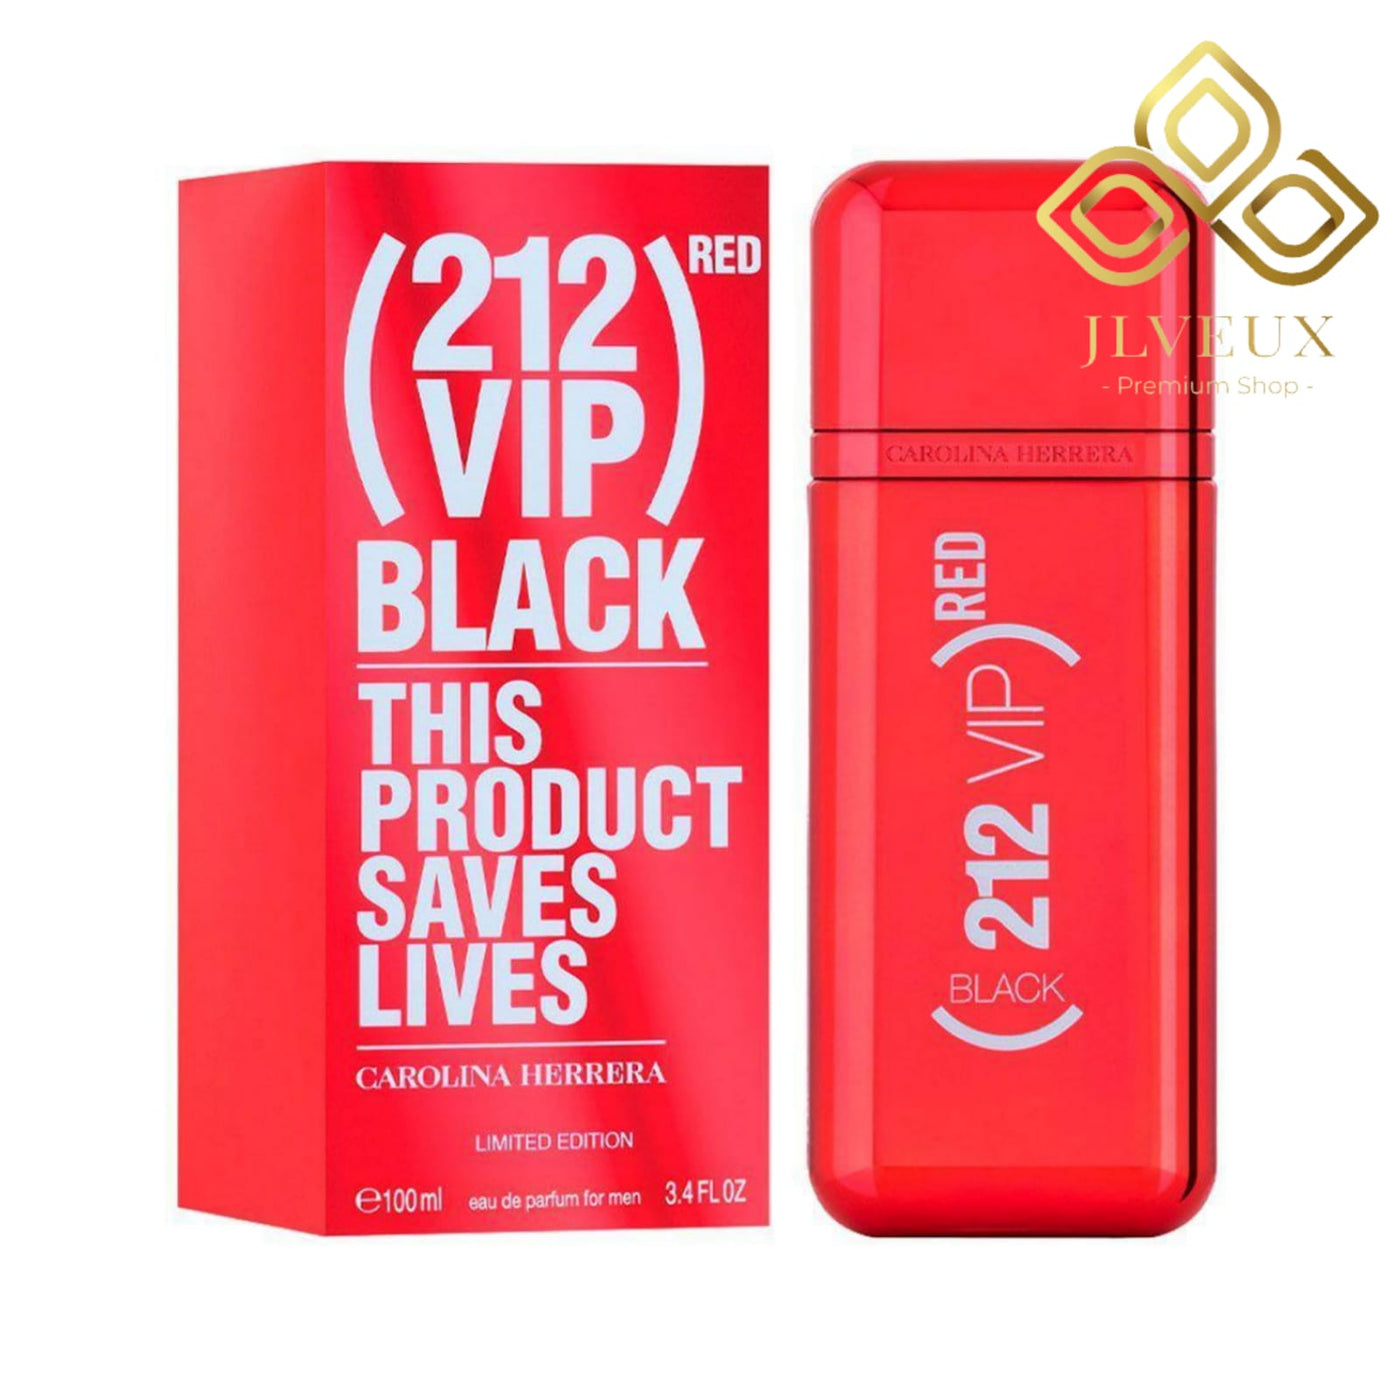 212 VIP Black (Red) Limited Edition Carolina Herrera